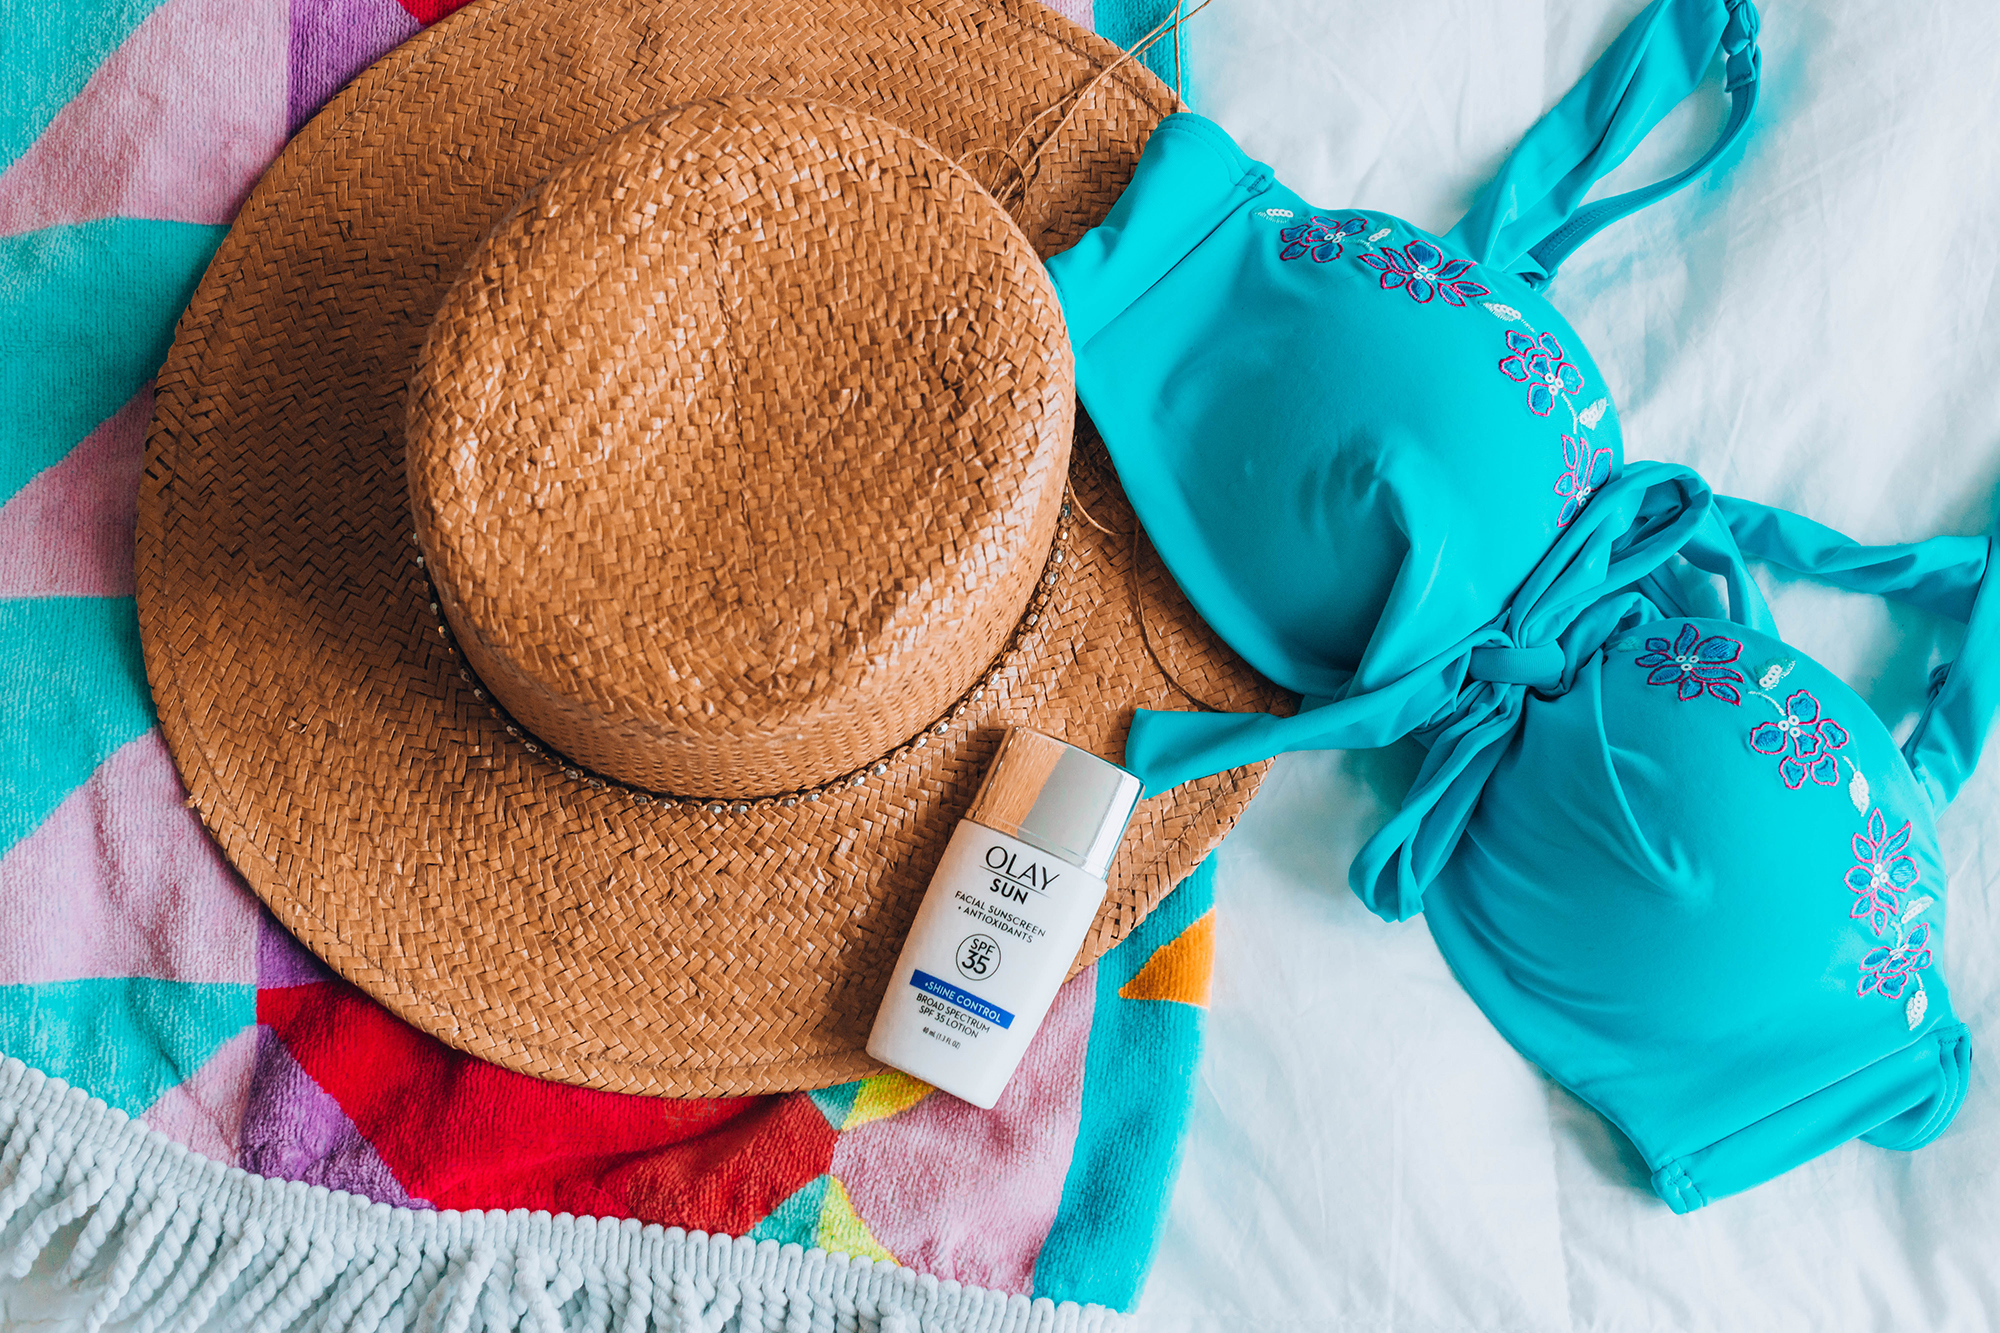 beach accessories (including a straw hat, bikini top, rainbow towel, and Olay SPF moisturizer) in a flatlay 